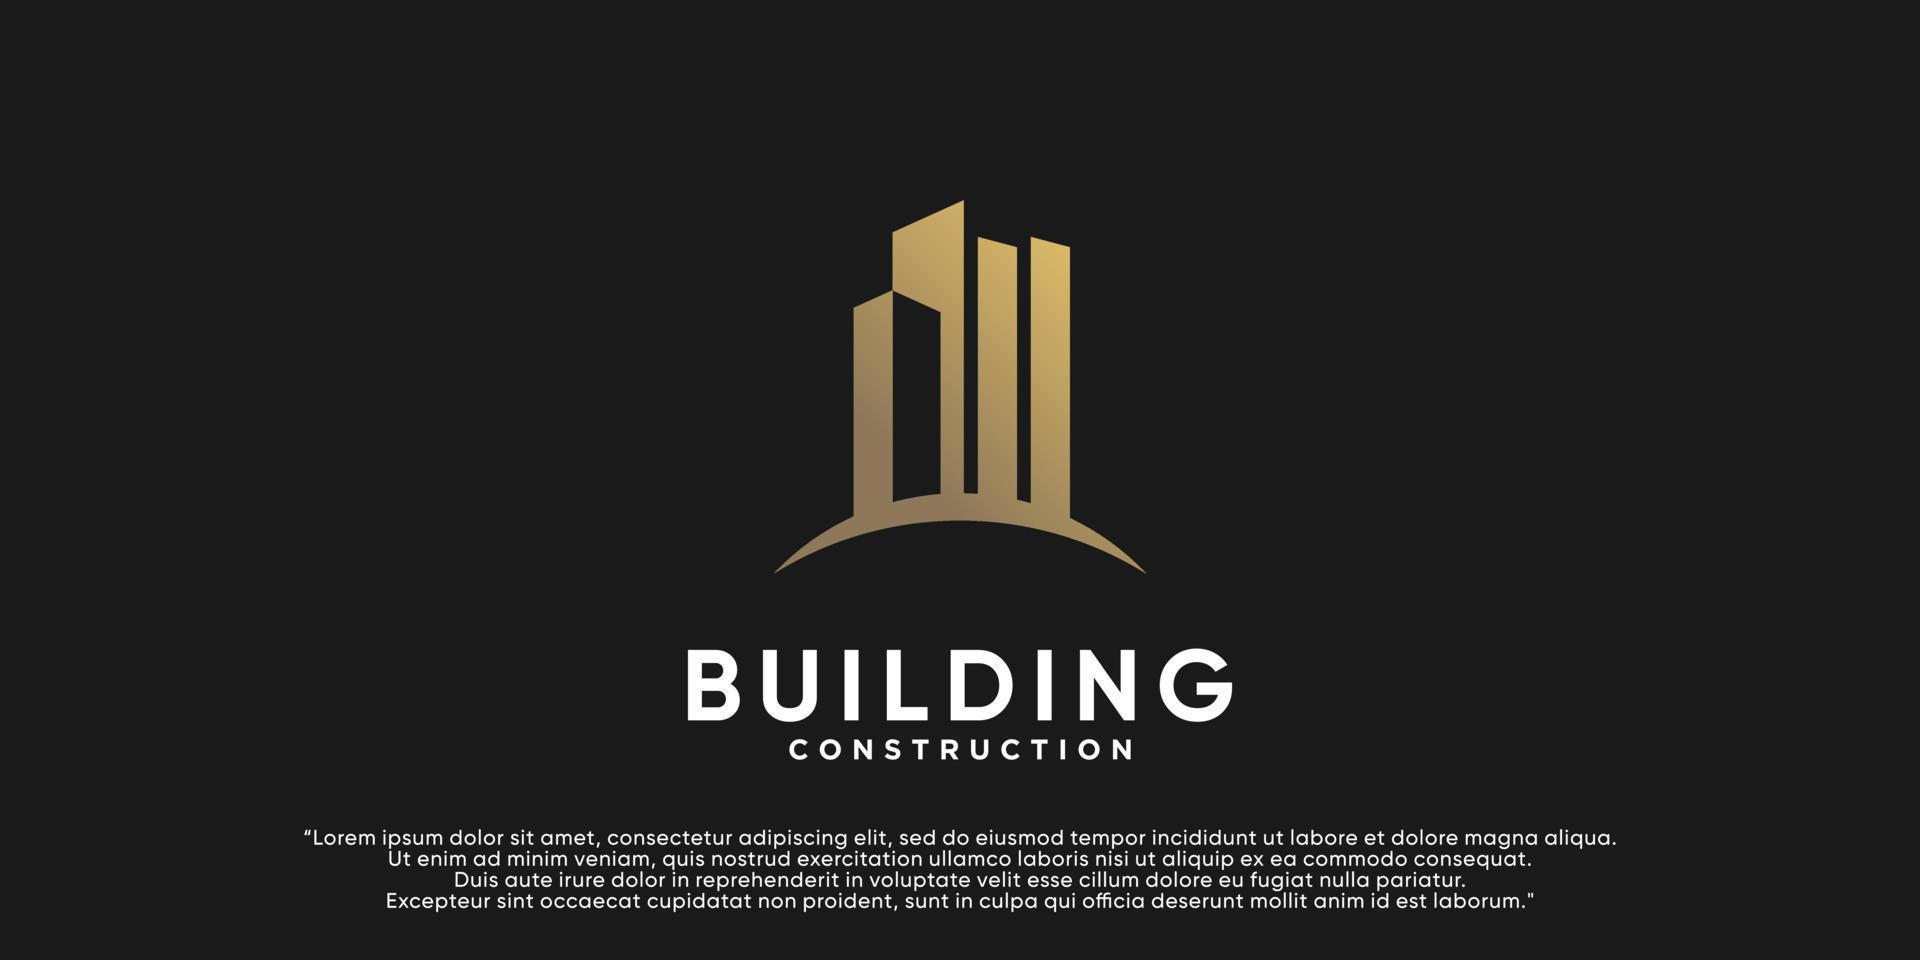 Building logo design illustration for business construction with creative concept Premium Vector